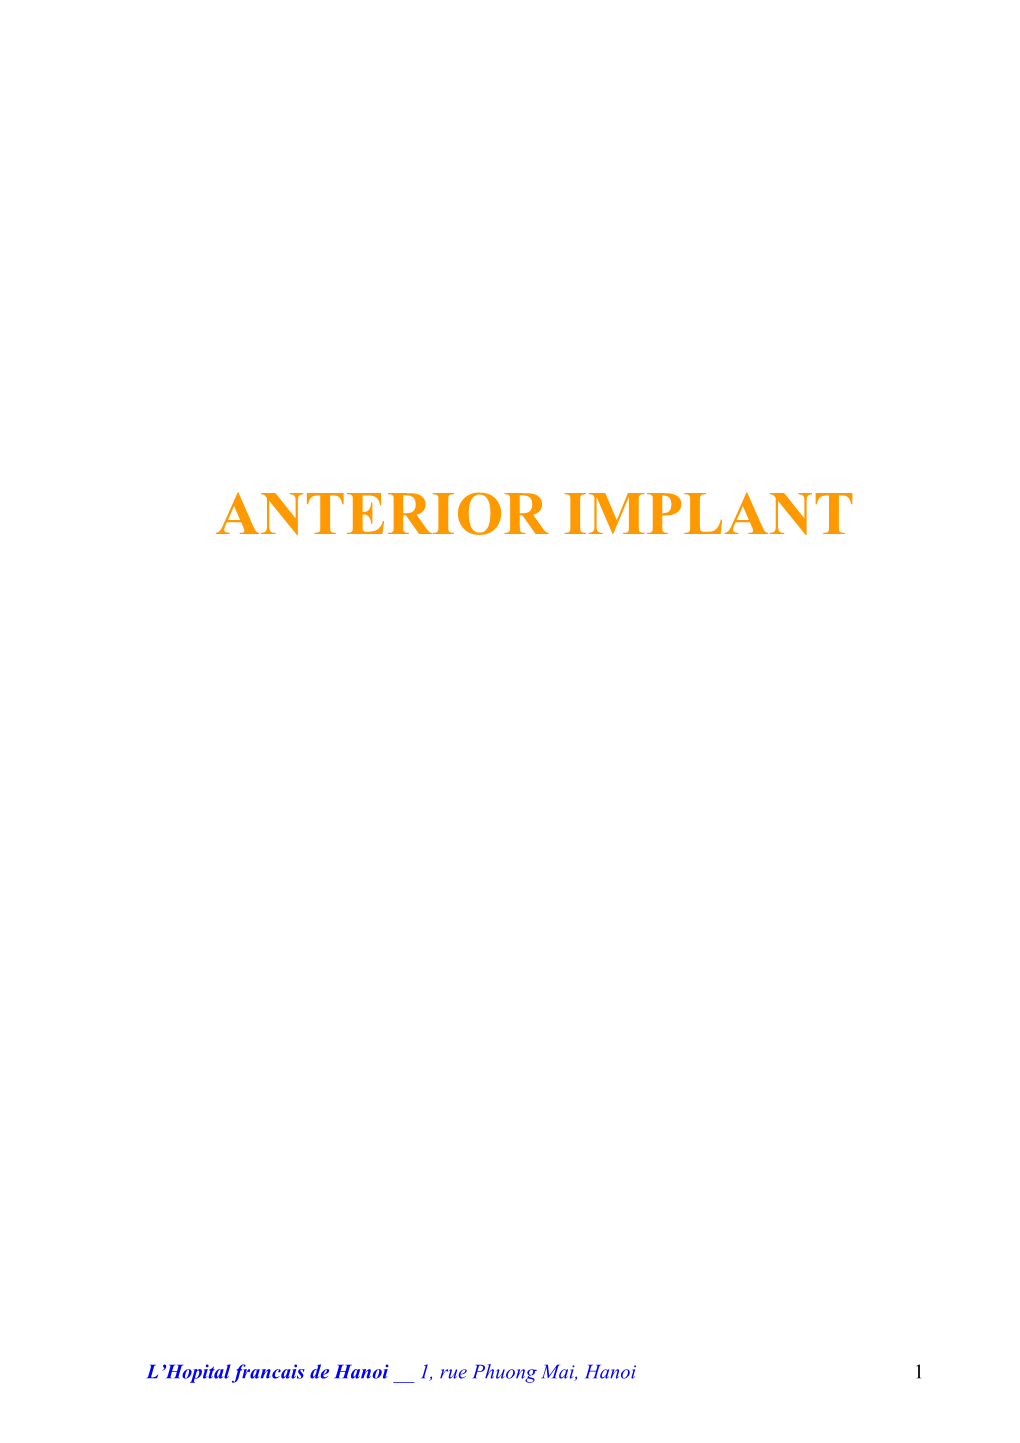 Anterior Implant